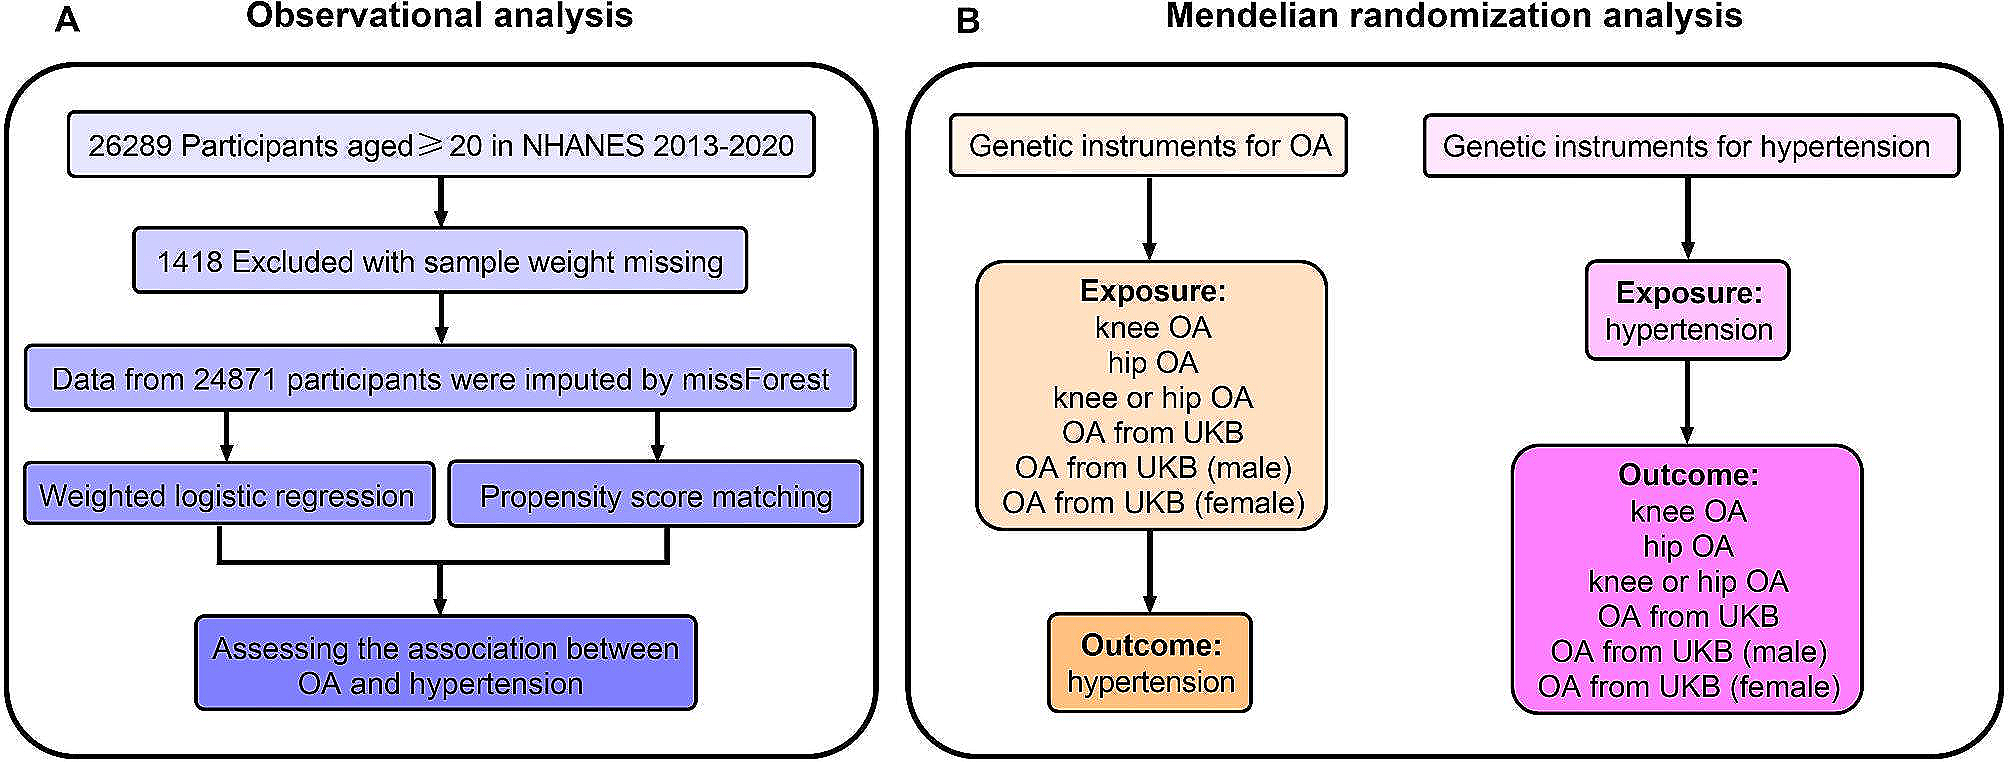 Osteoarthritis and hypertension: observational and Mendelian randomization analyses